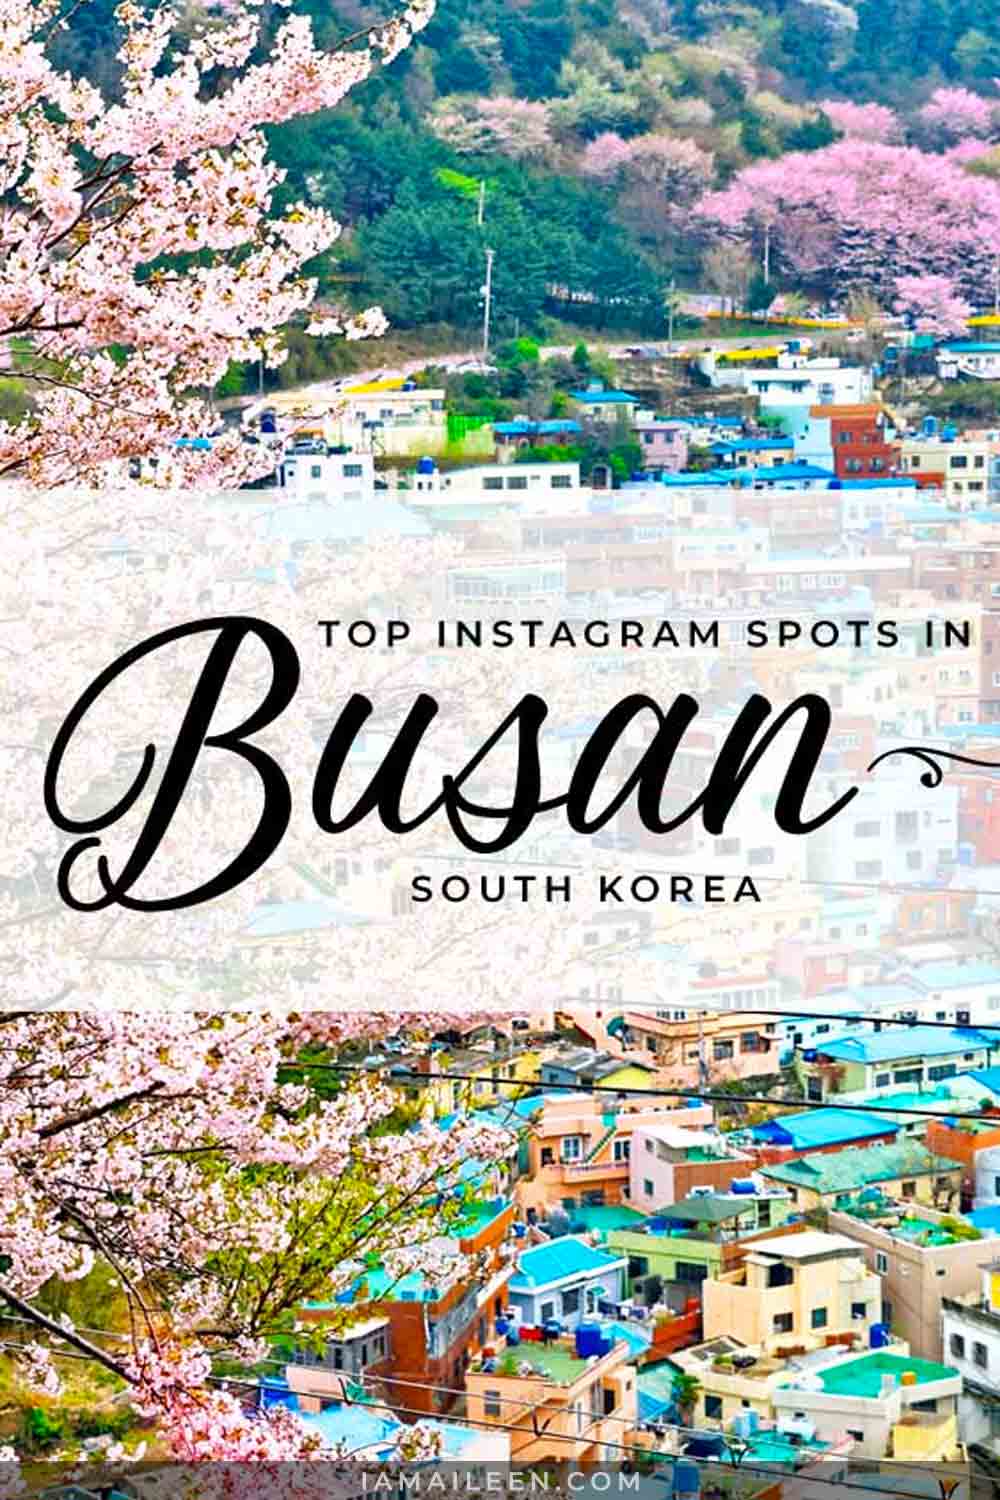 Top 10 Instagram Spots in Busan, South Korea